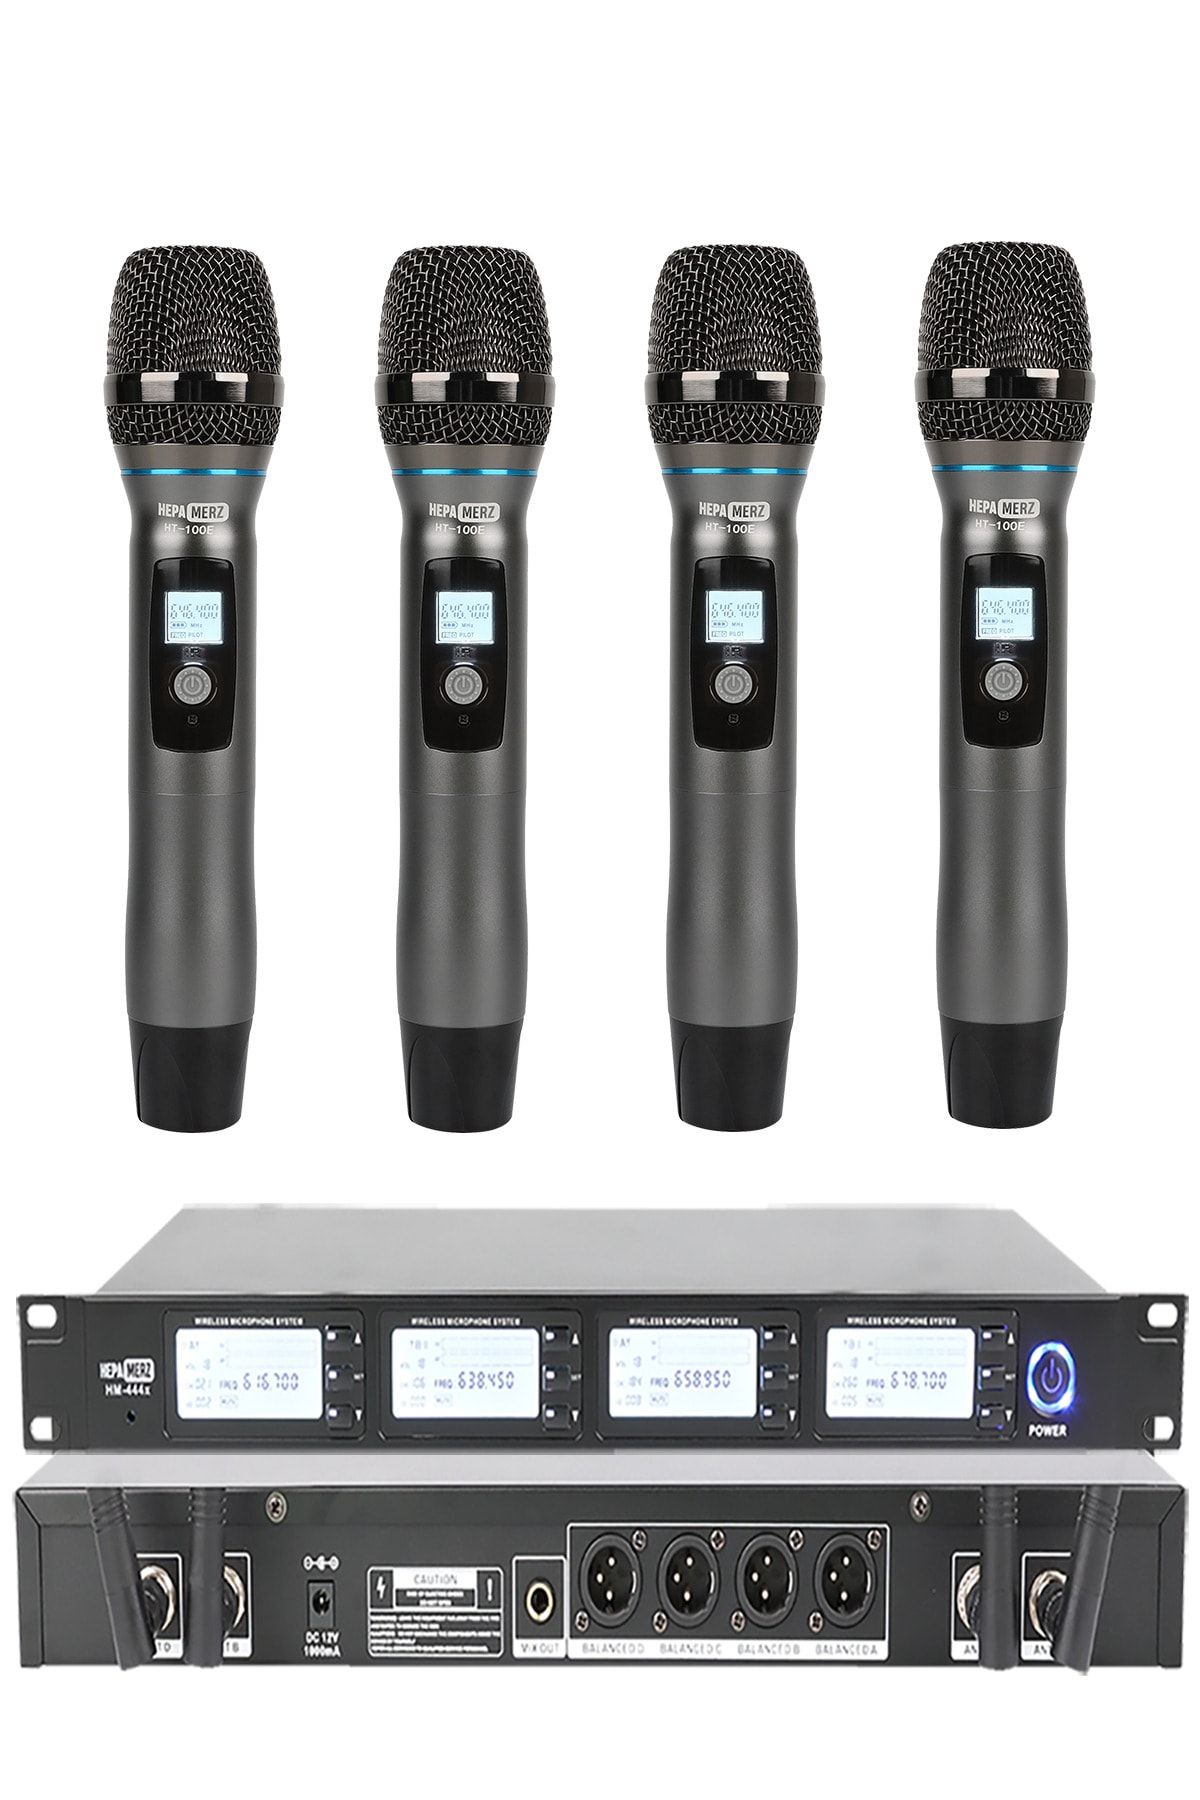 Hepa-Merz Hm-444e Dijital Uhf 4'lü Kablosuz El Mikrofonu Telsiz Mikrofon 4 El